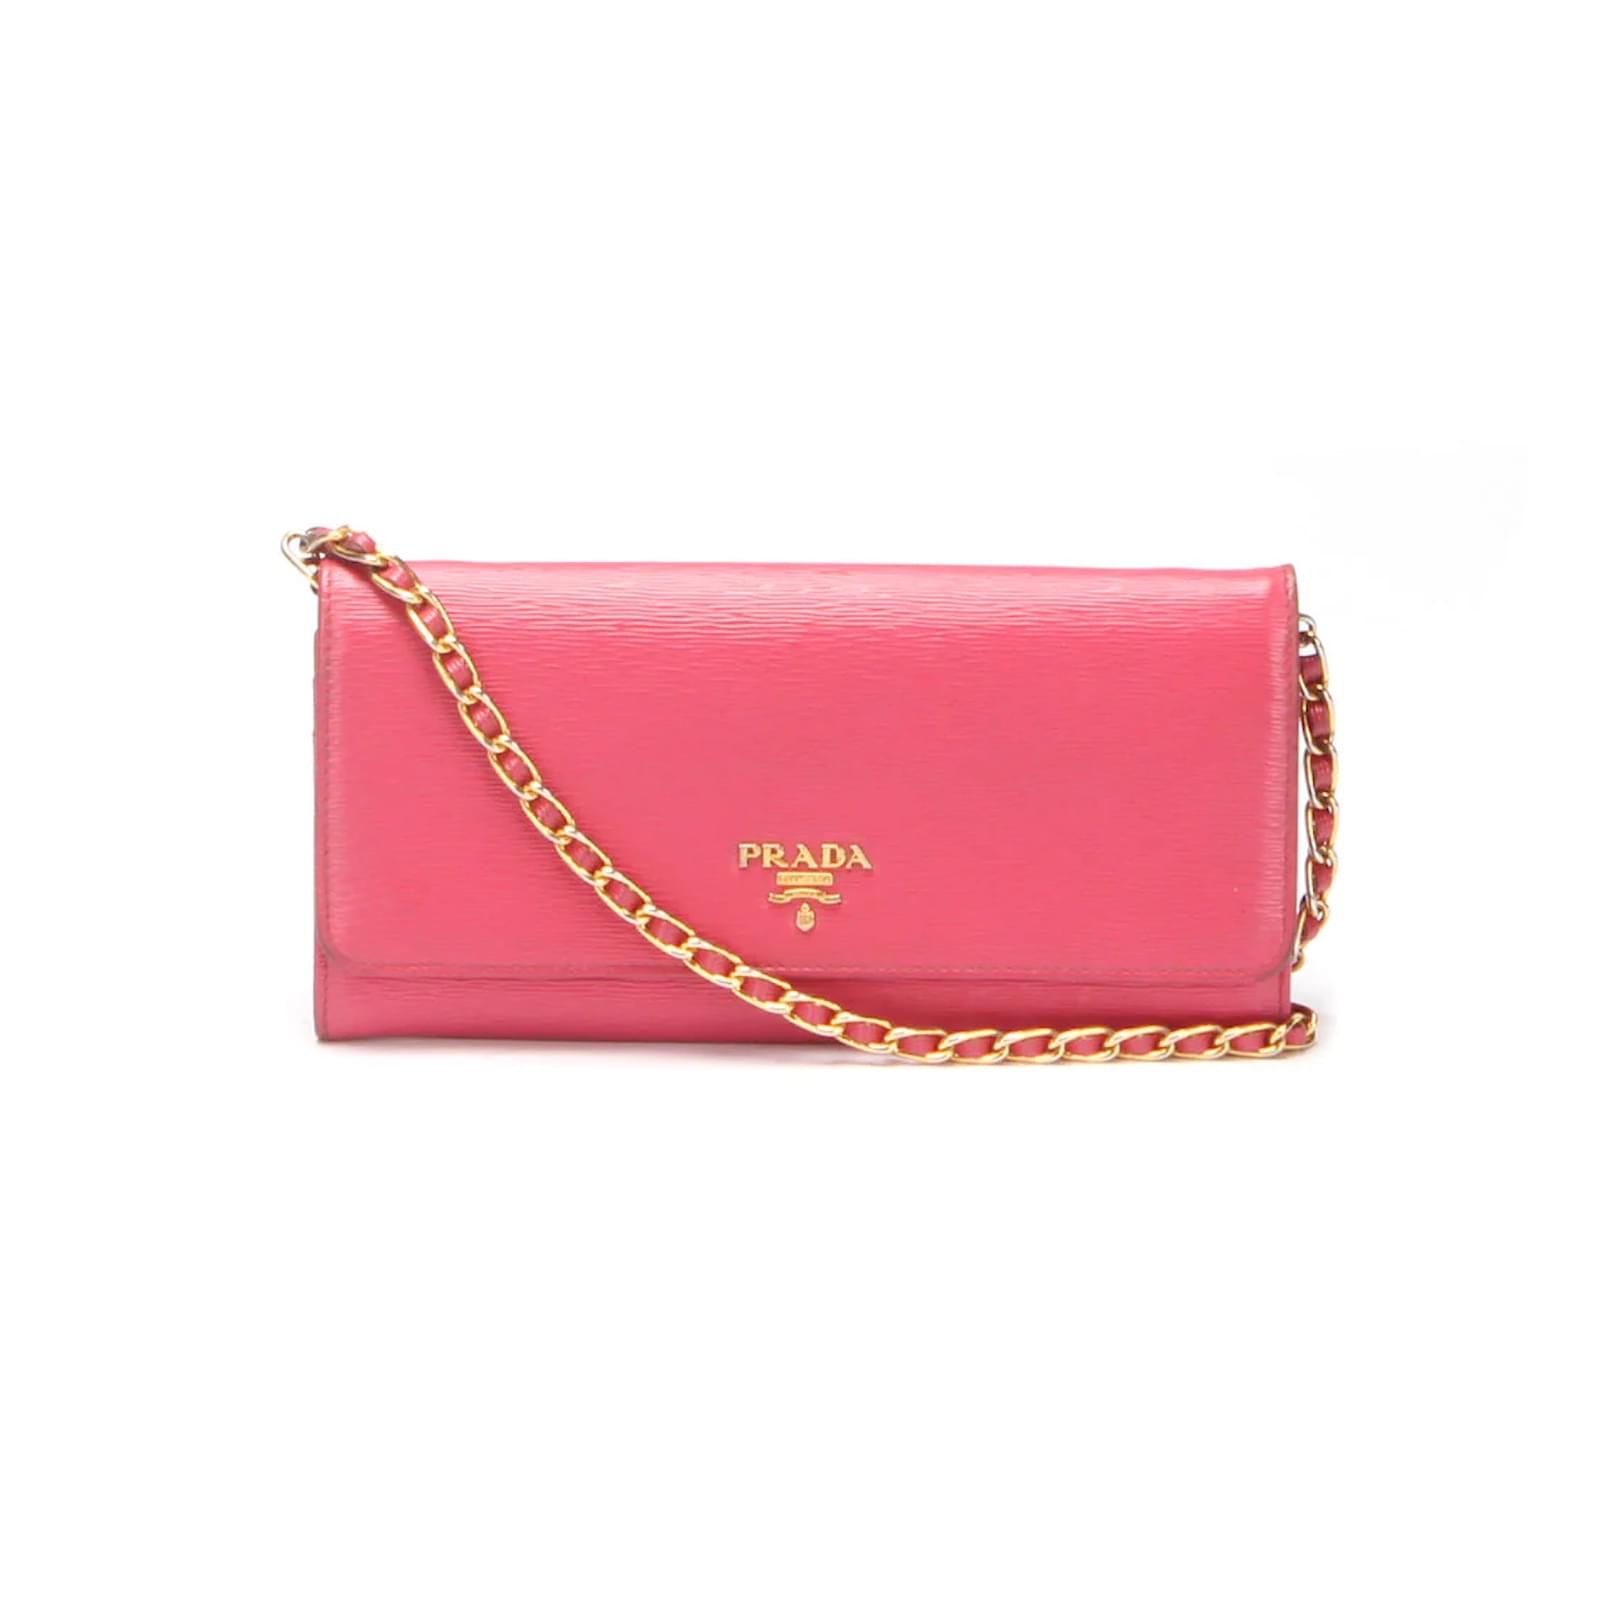 Shop Prada's Small Tote Bag In Pale Pink